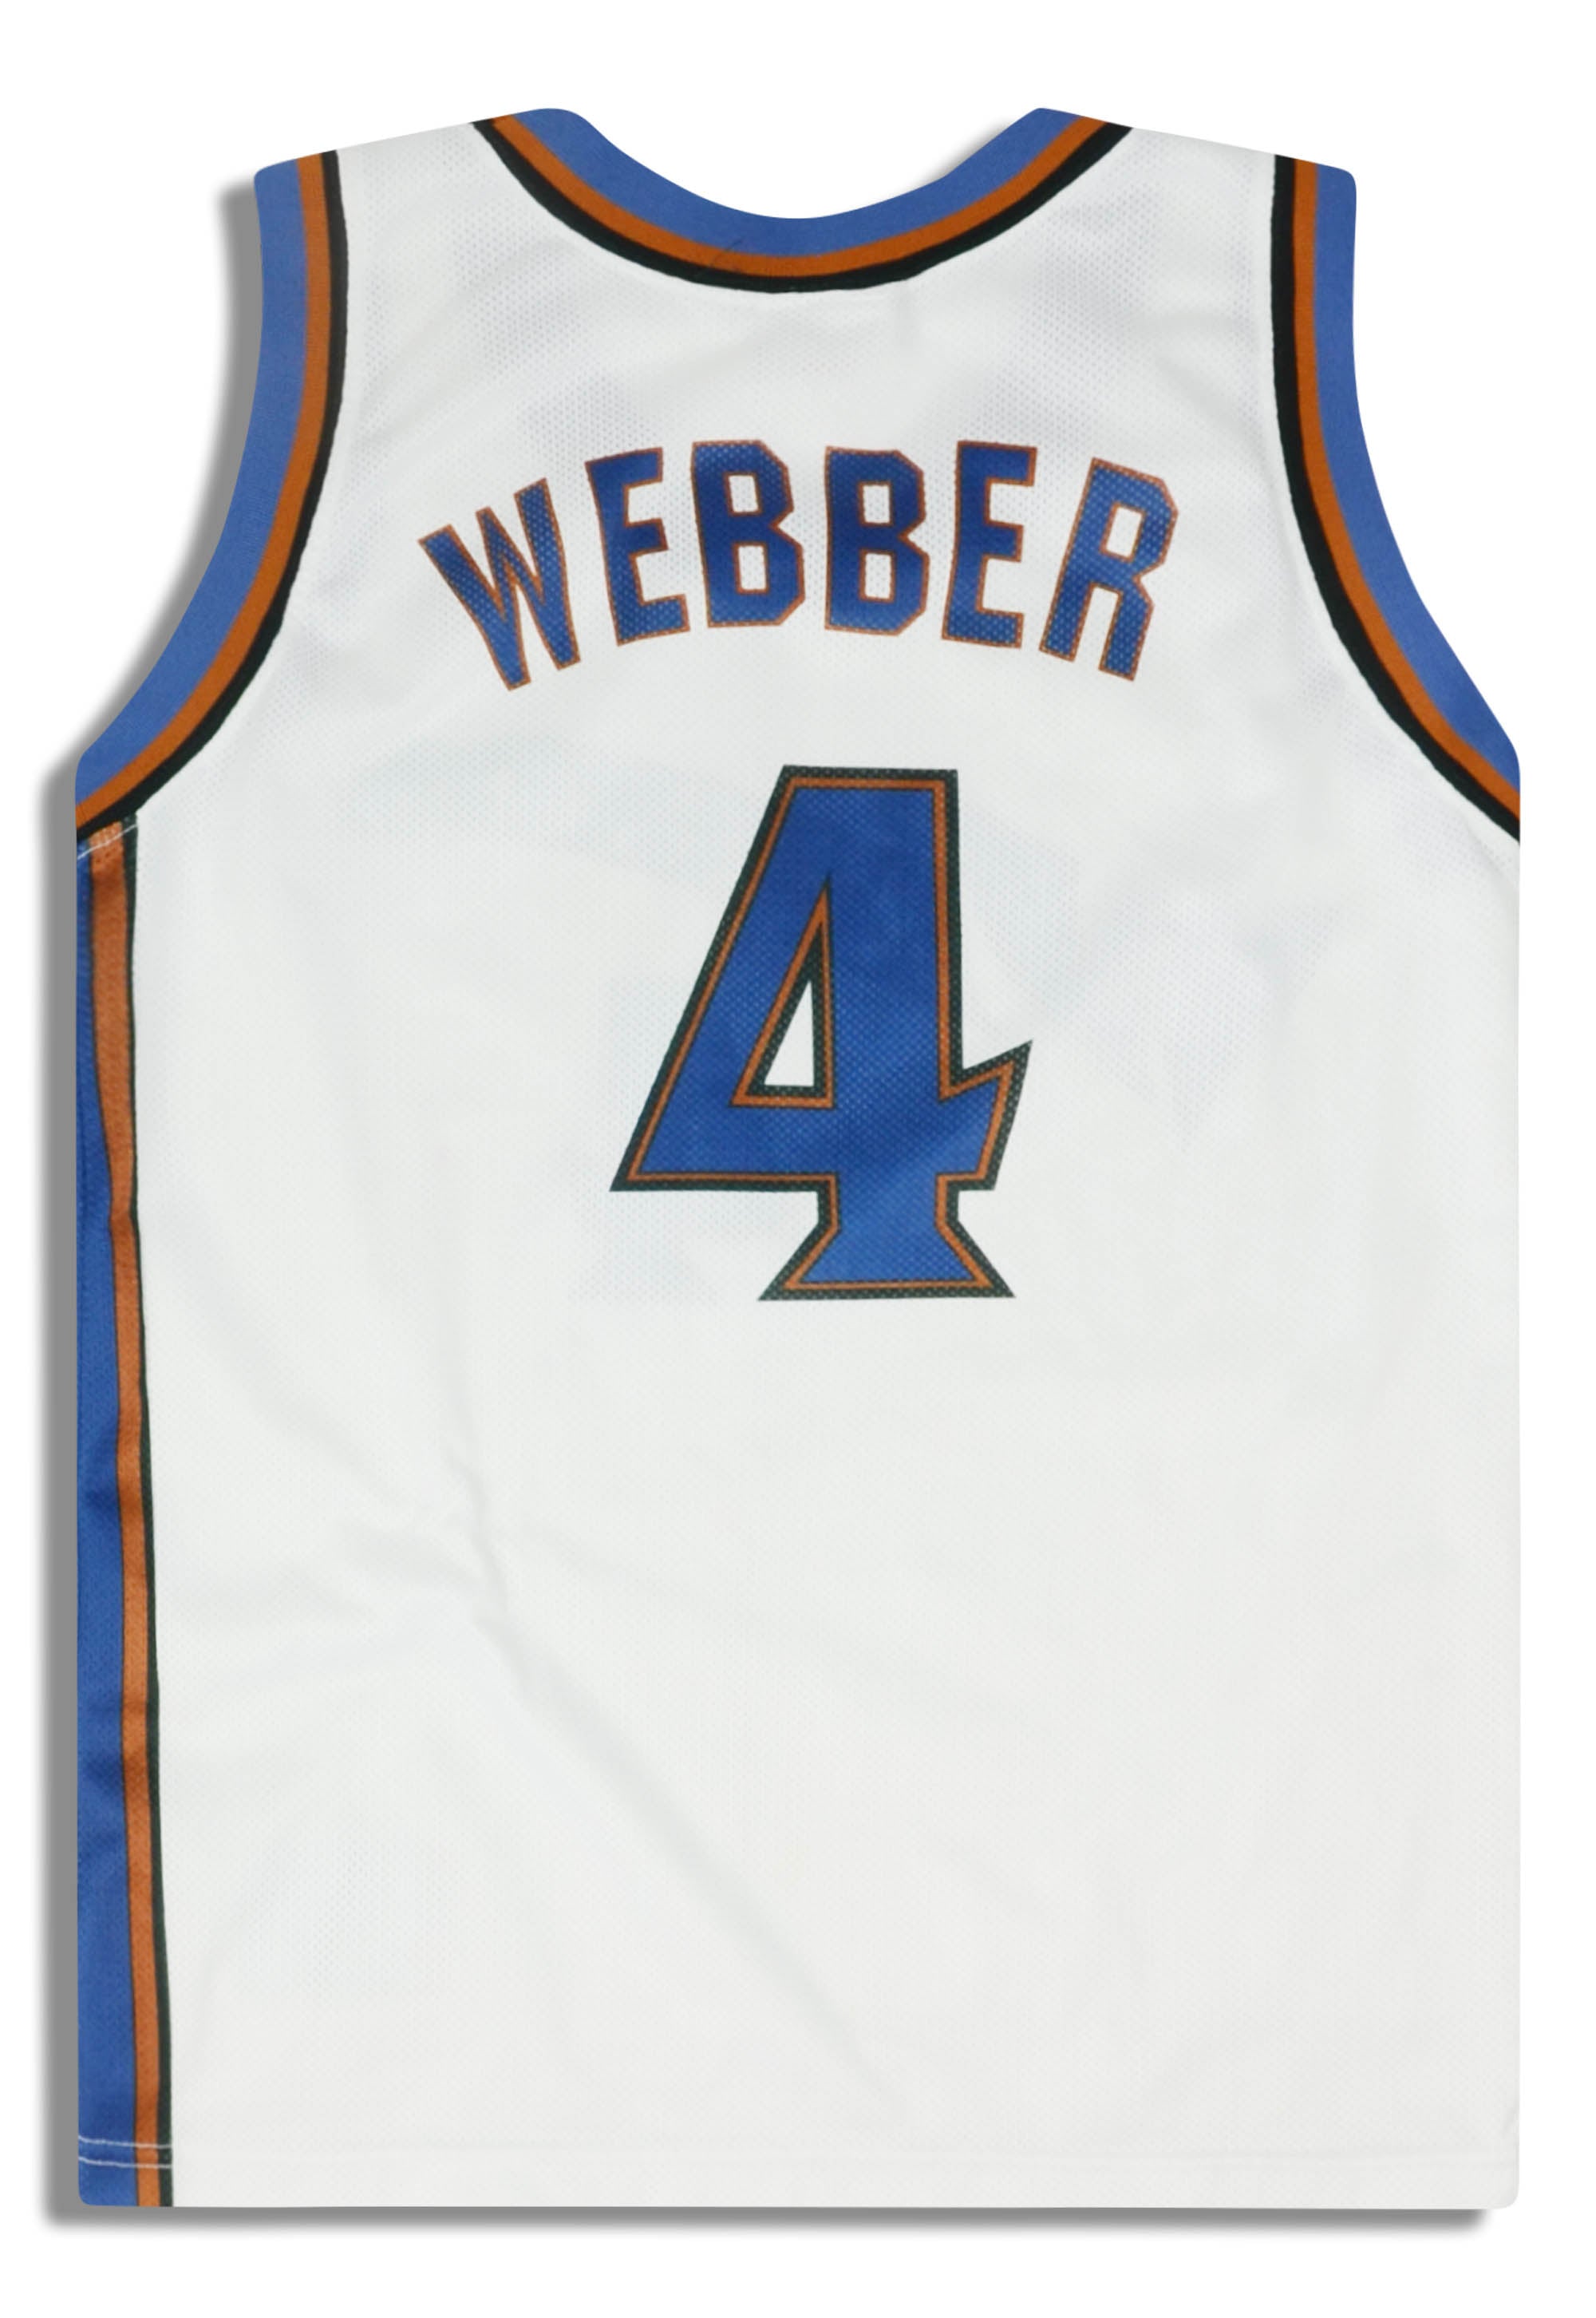 Champion Chris Webber #4 Washington Bullets Basketball Jersey USA